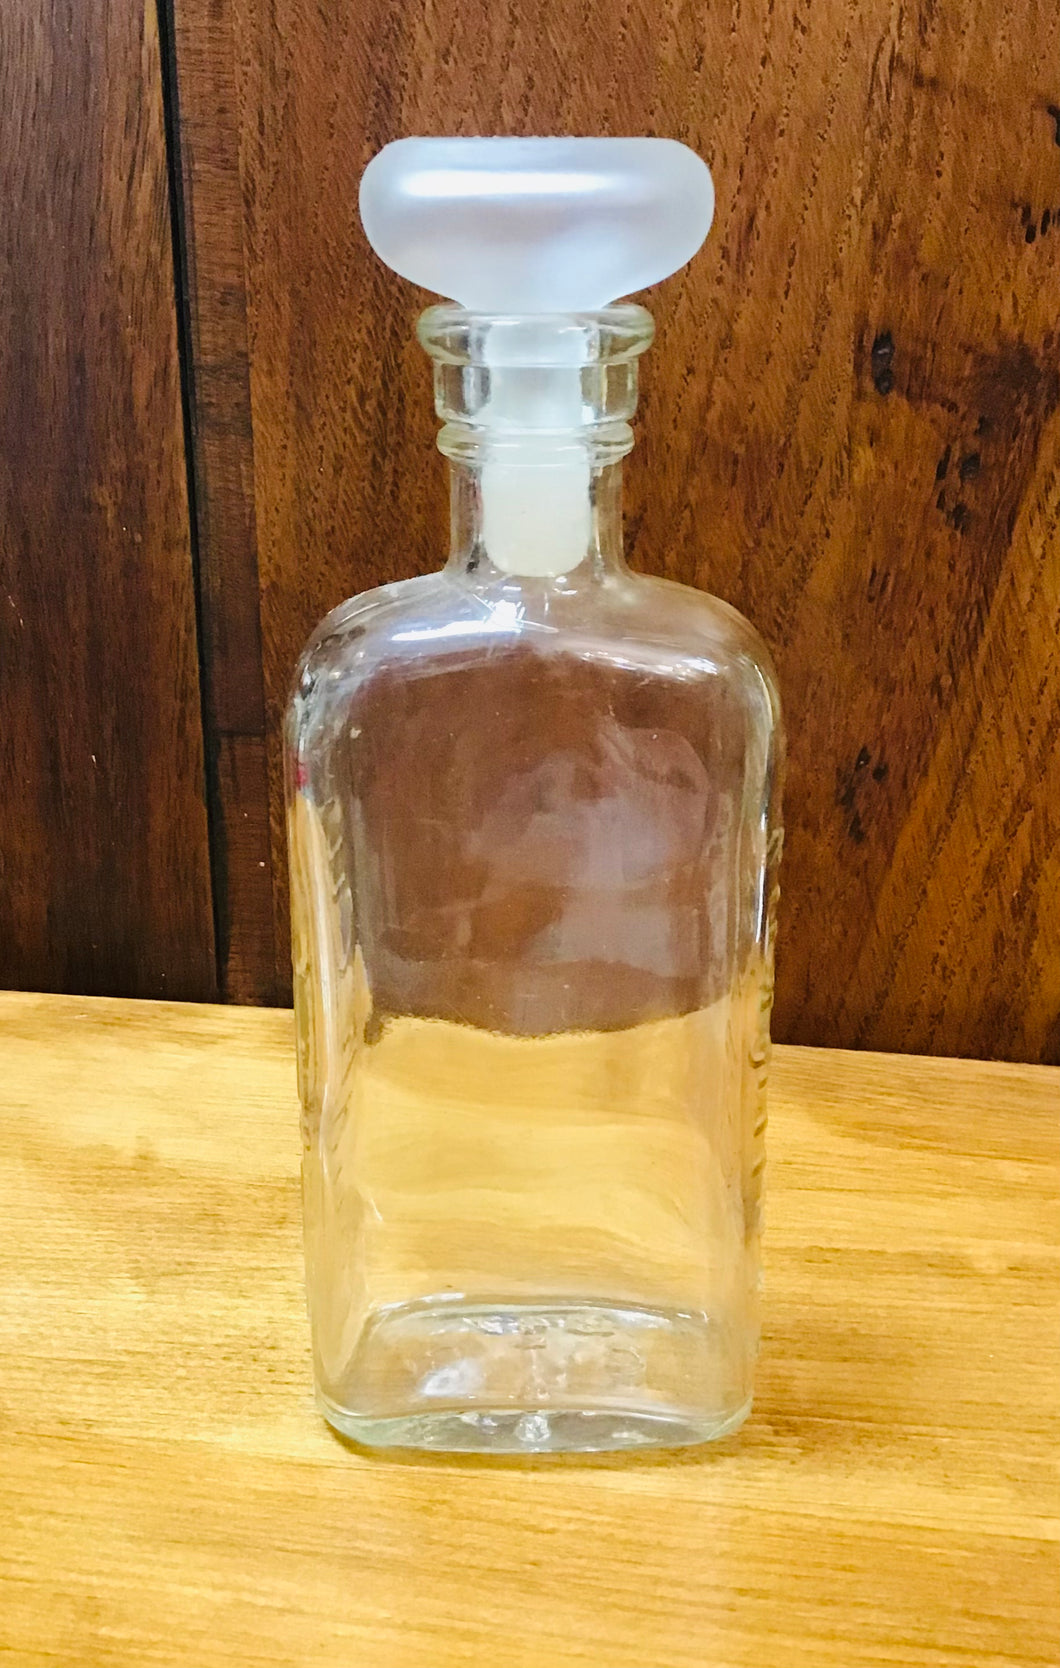 Potel ‘Liqufruta, Cough Cure’ Vintage gyda’r caead gwreiddiol / Vintage ‘Liqufruta, Cough Care’ bottle with the original top